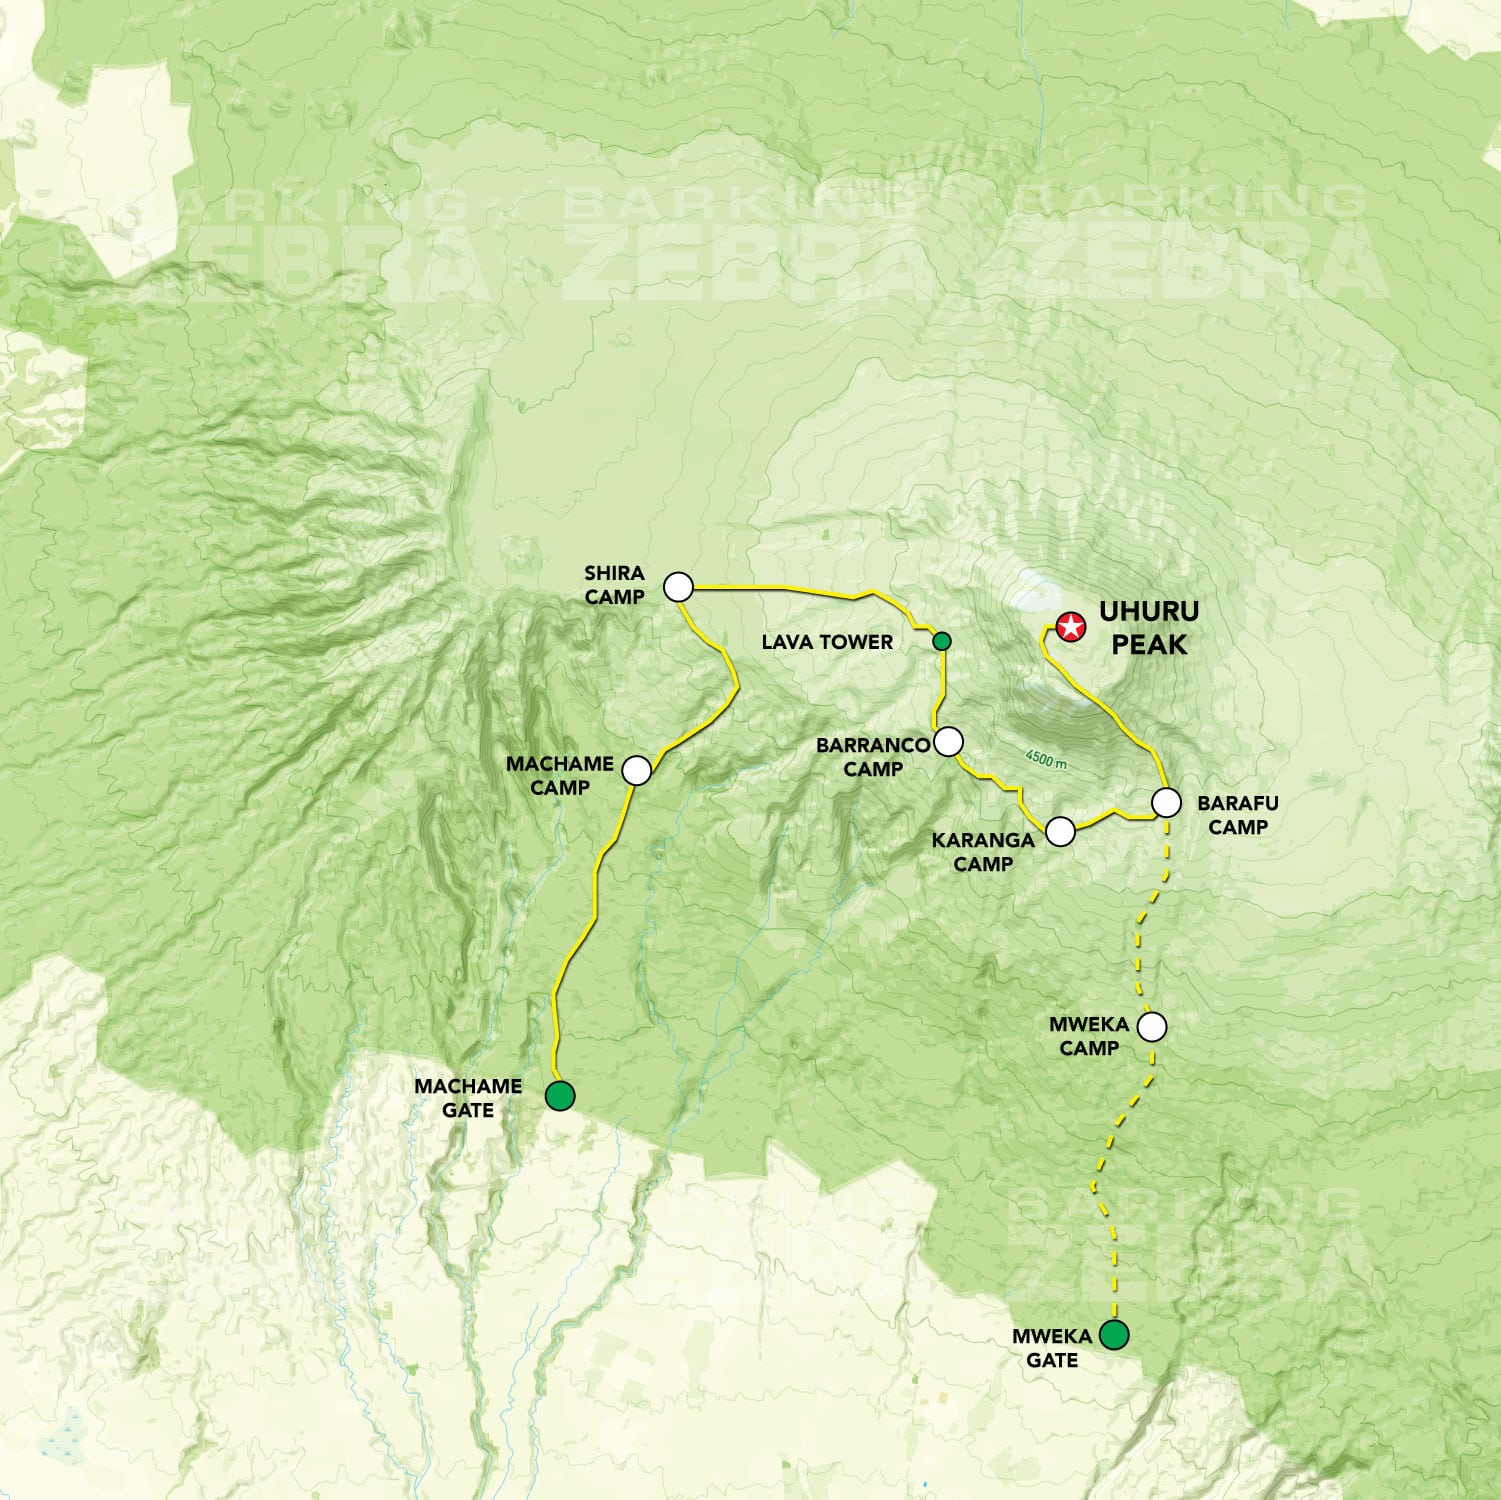 Machame route topographic map of Mount Kilimanjaro